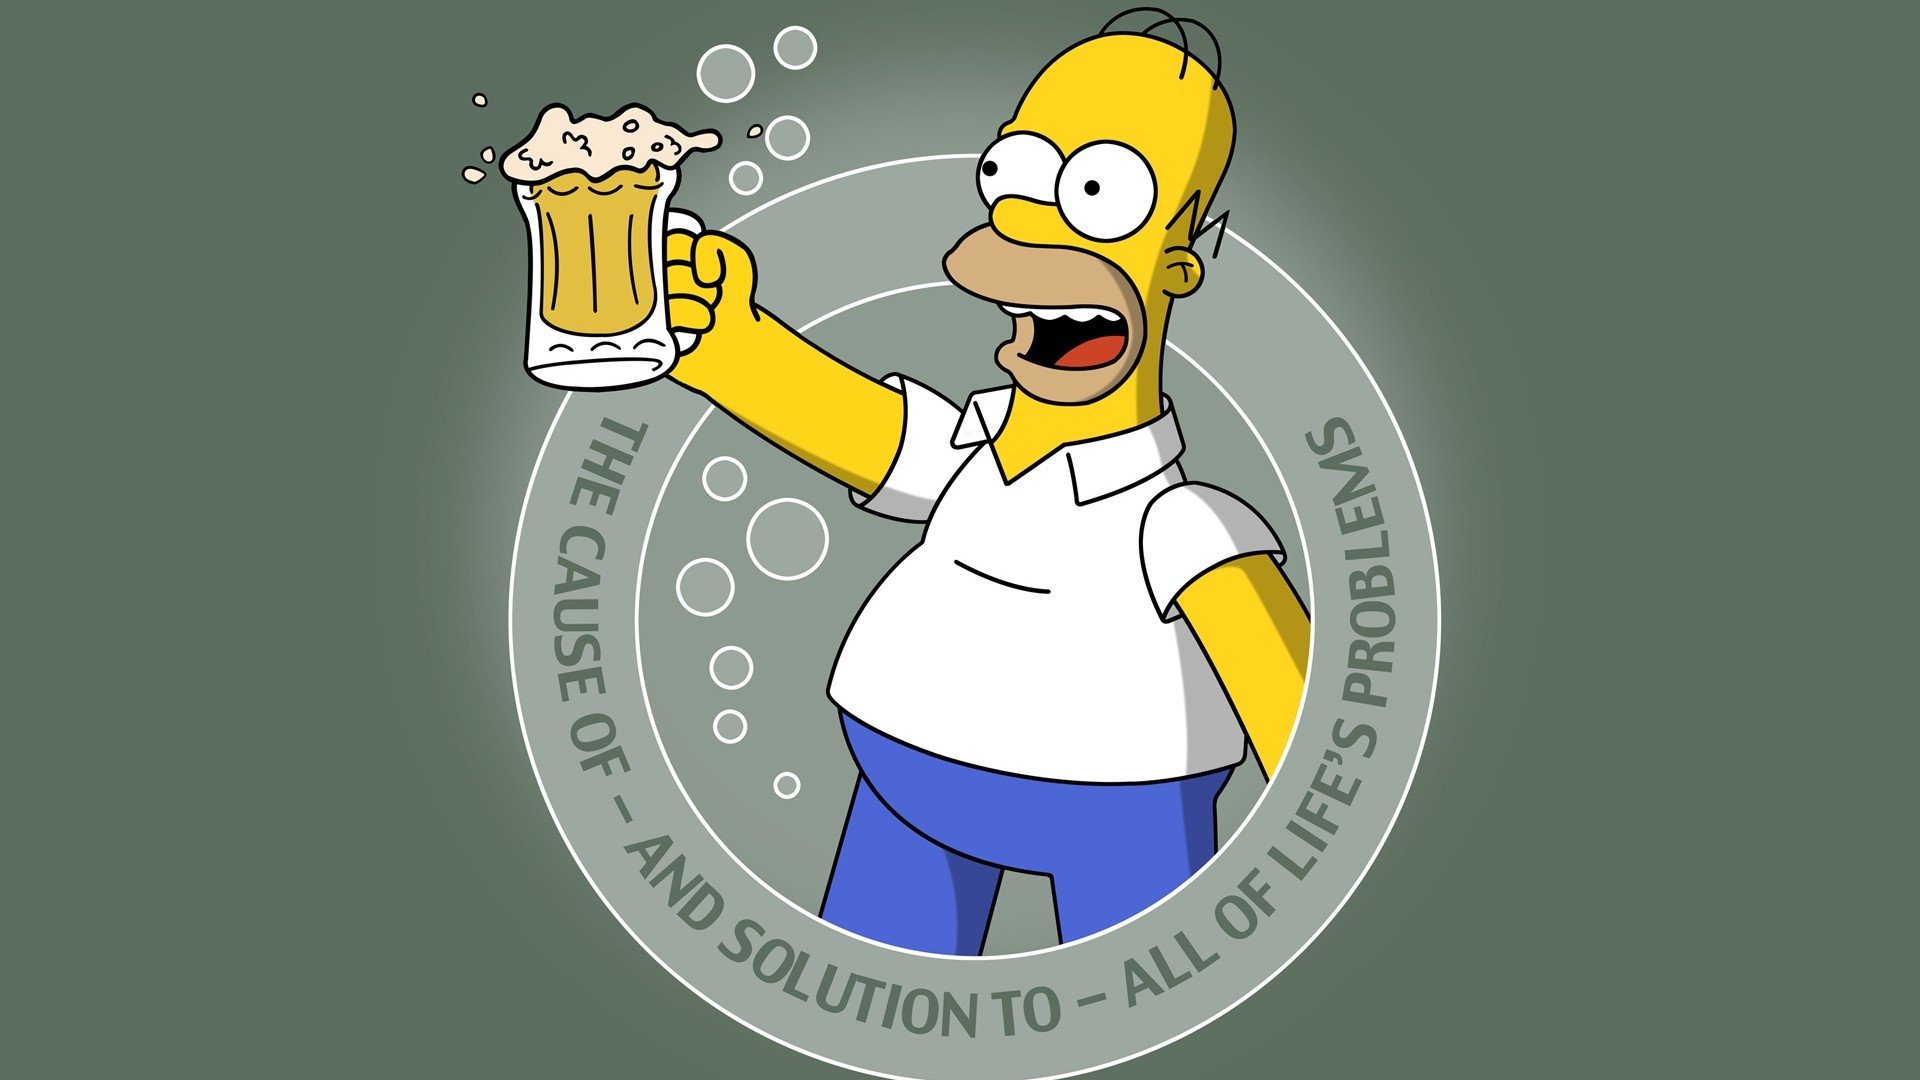 General 1920x1080 The Simpsons Homer Simpson beer typography simple background humor cartoon TV series beer mugs open mouth mug